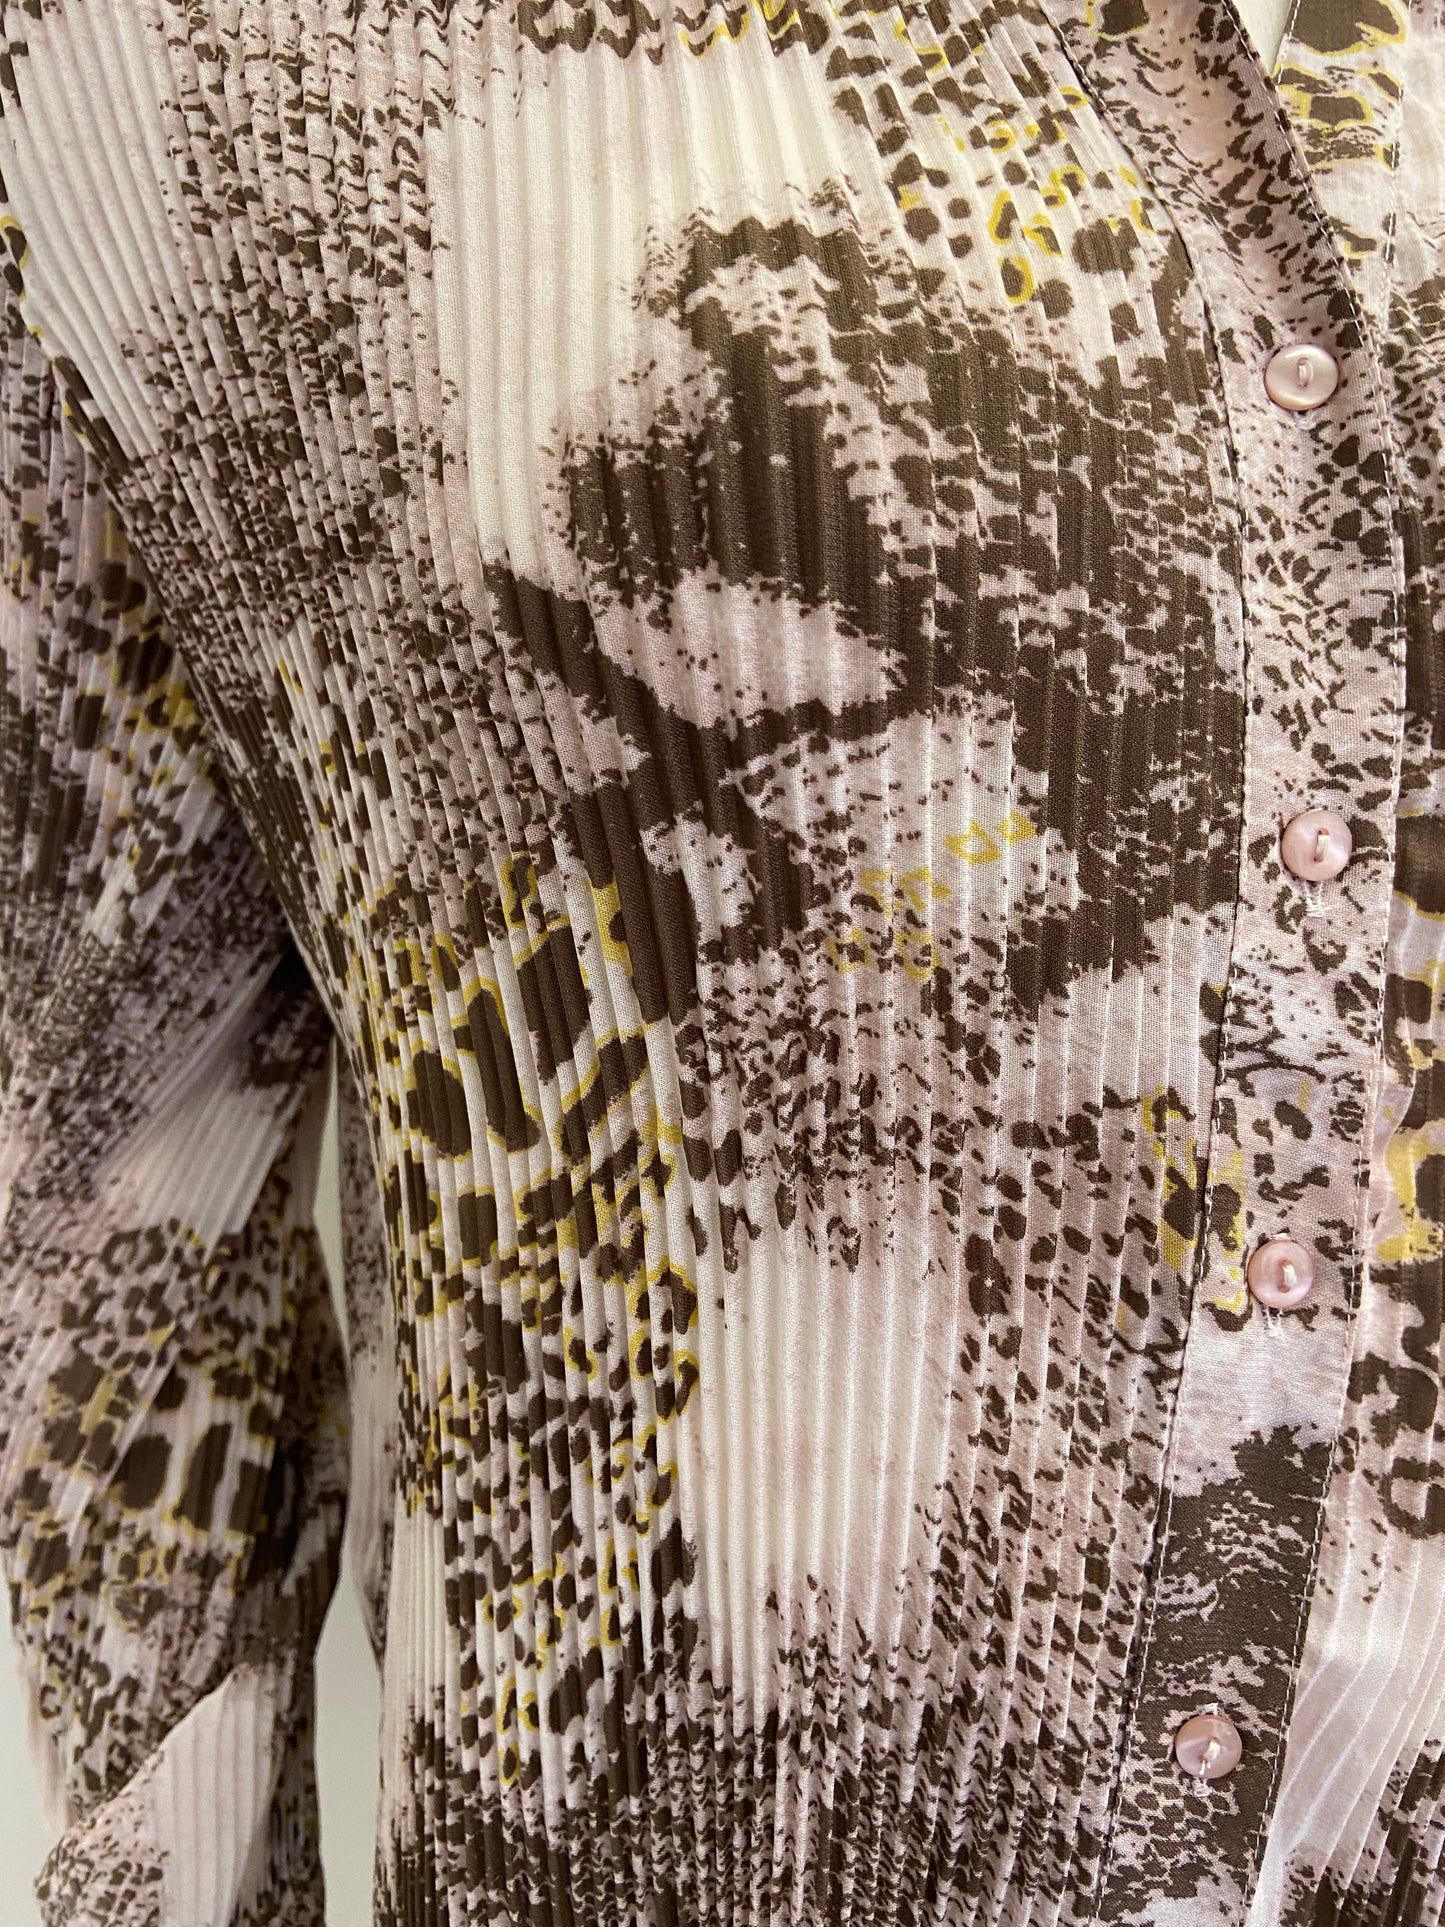 Leopard pleated shirt